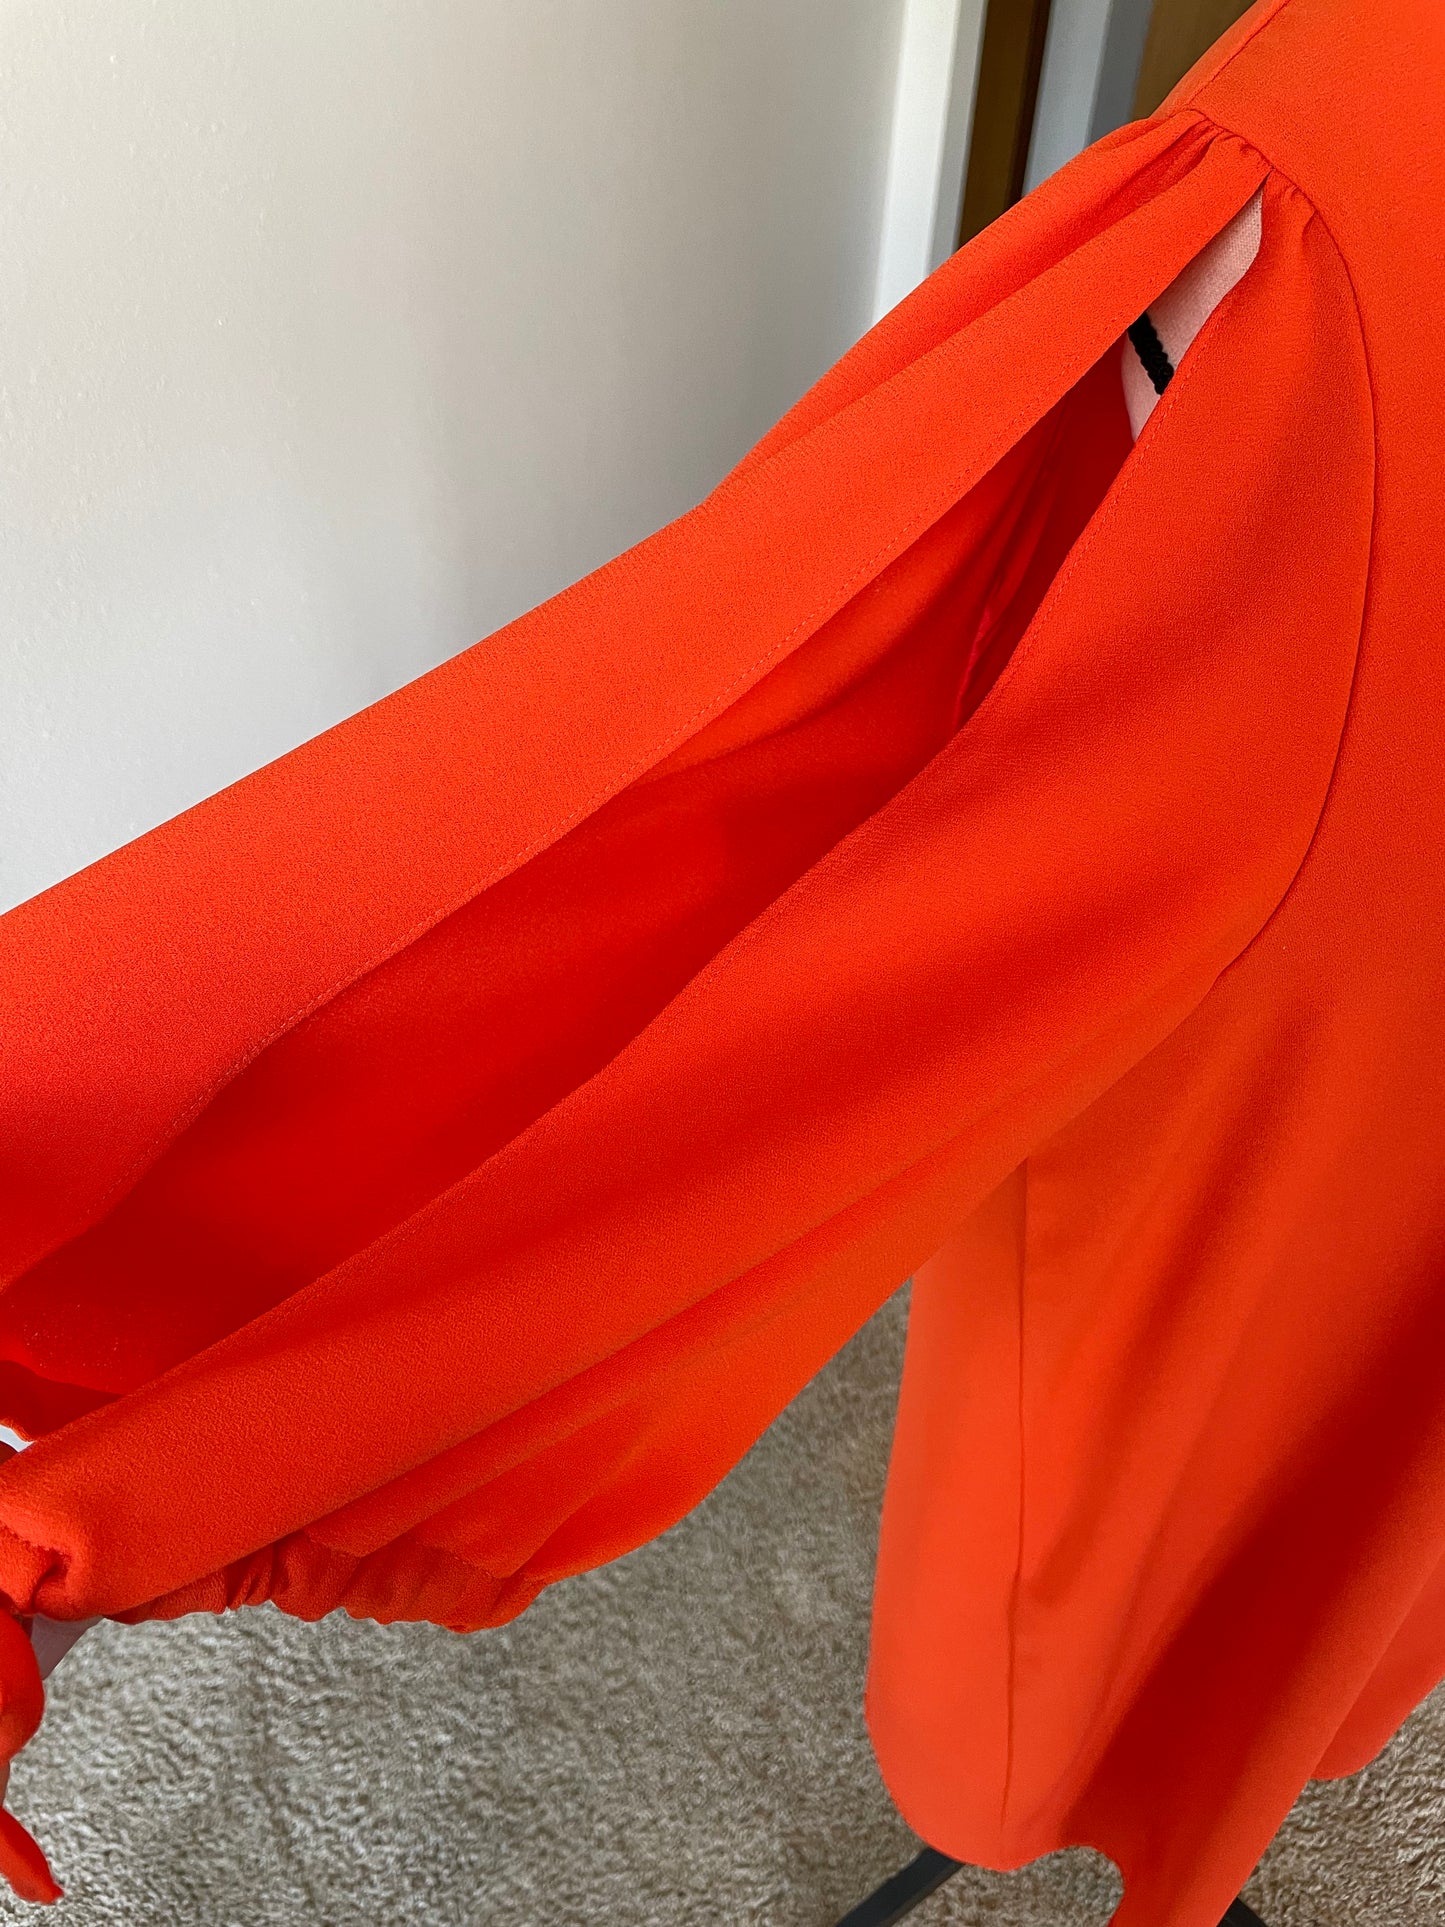 Mossimo Orange Shift Dress (XXL)